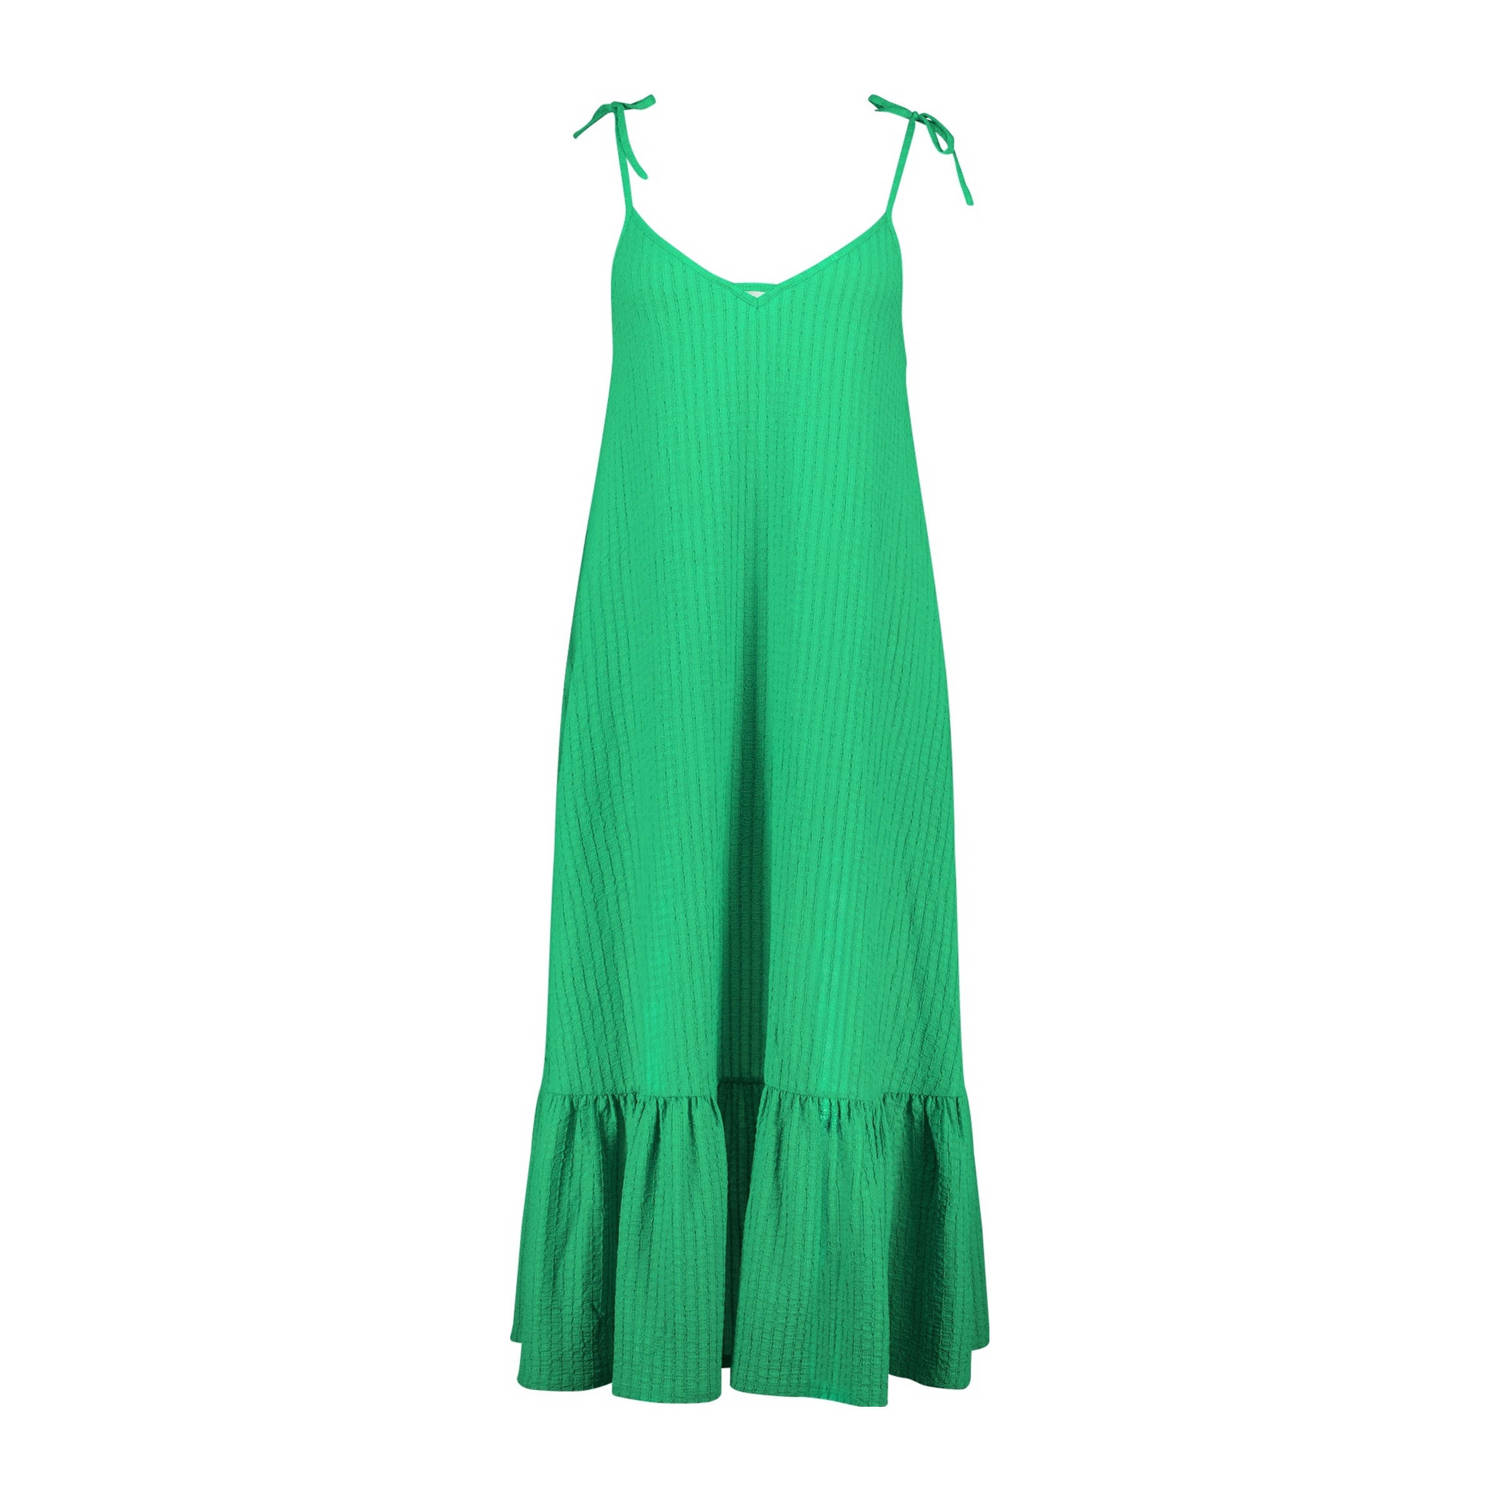 MS Mode ribgebreide A-lijn jurk groen